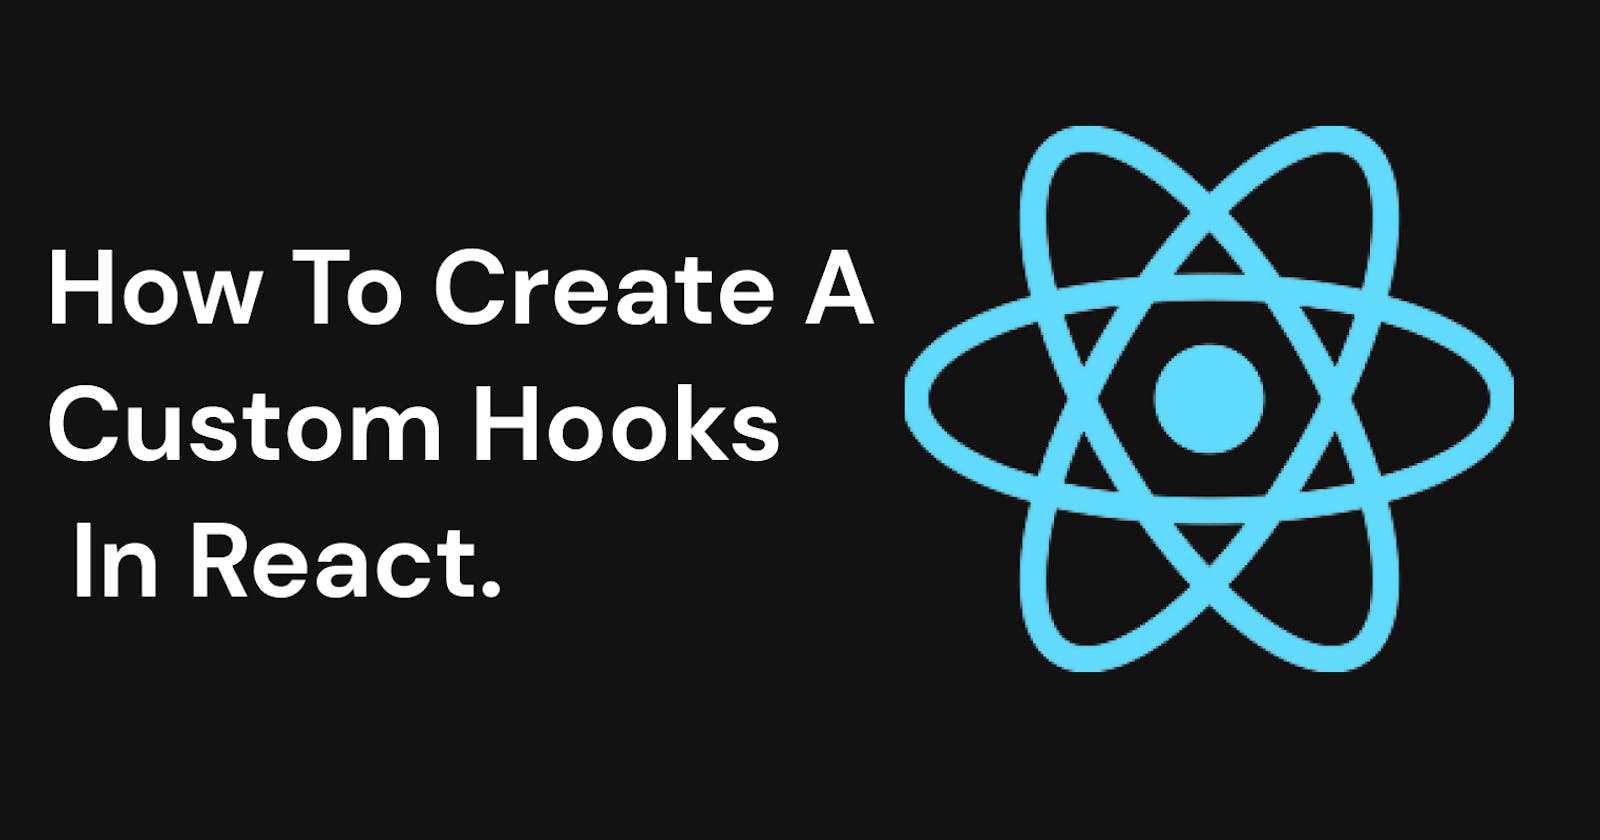 How To Create A Custom Hooks In React.